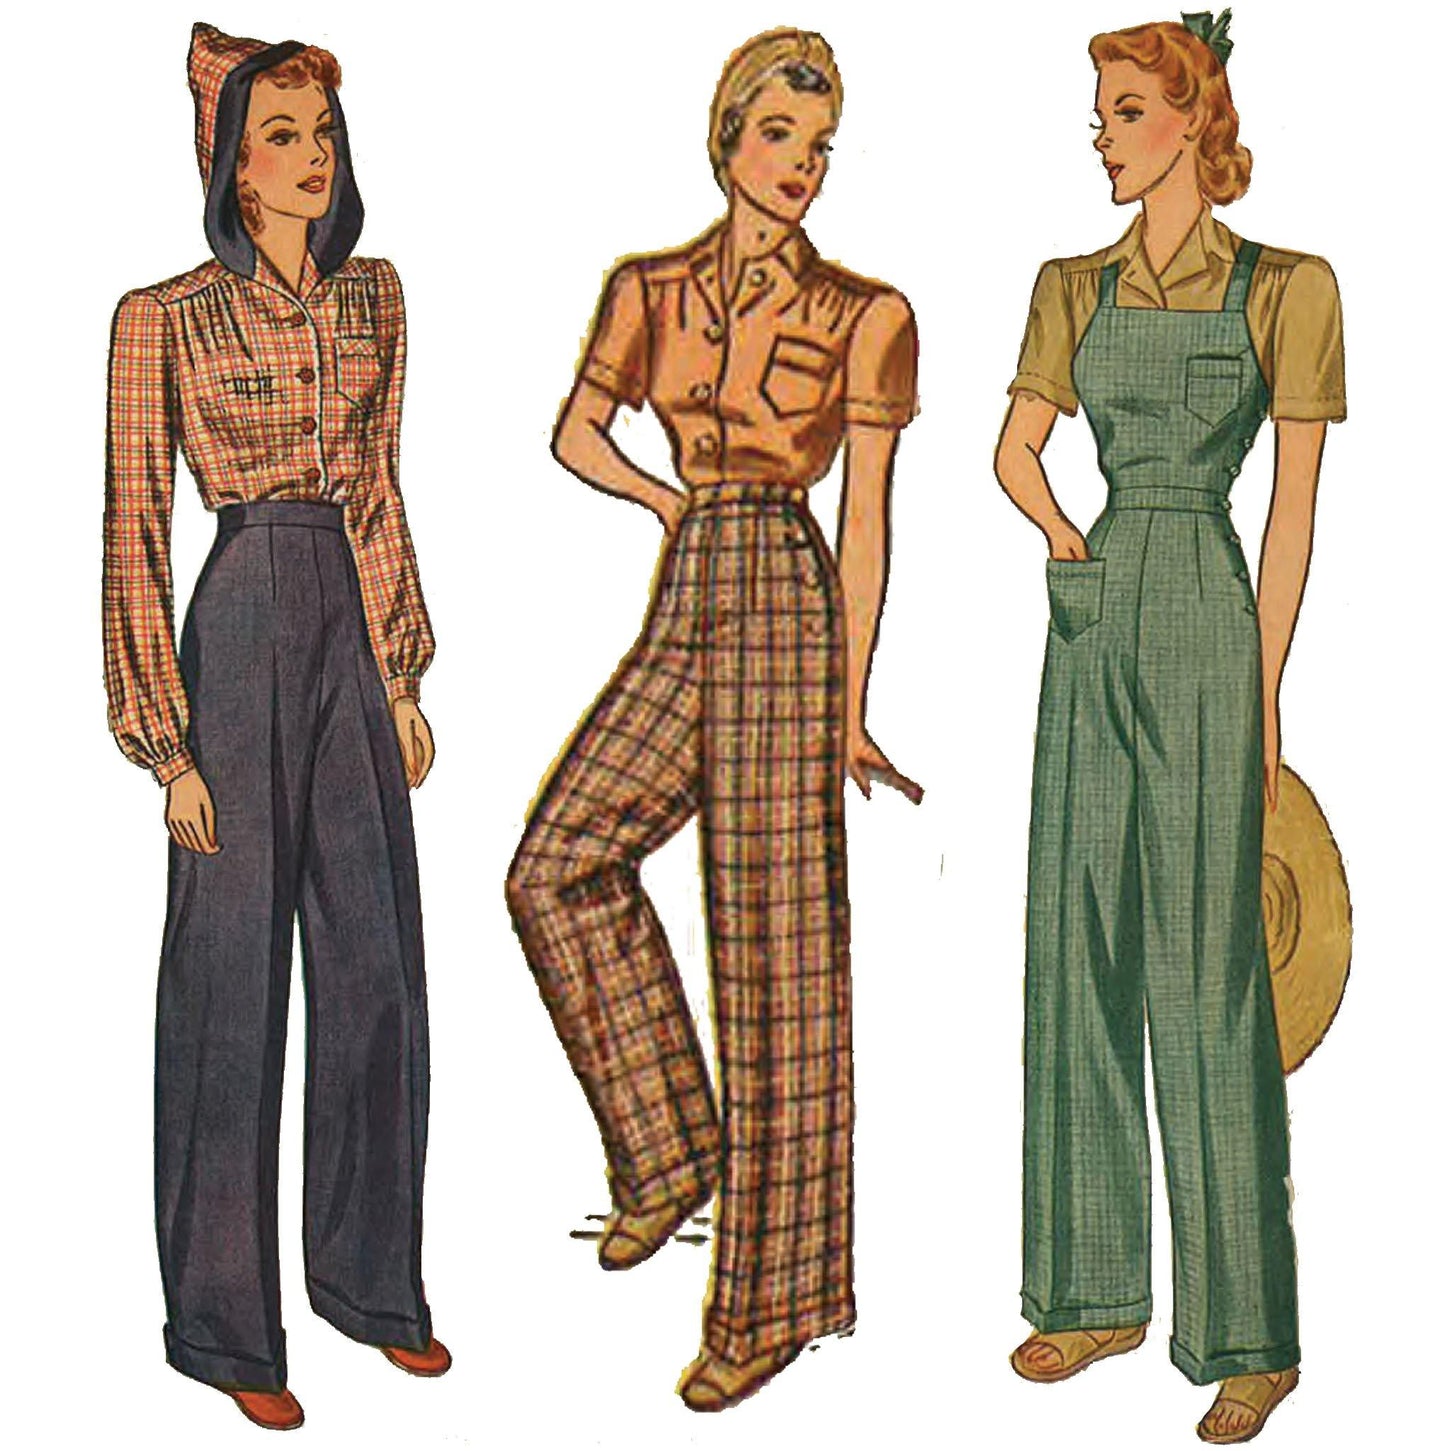 Women wearing dungarees, overalls, slacks and shirt.